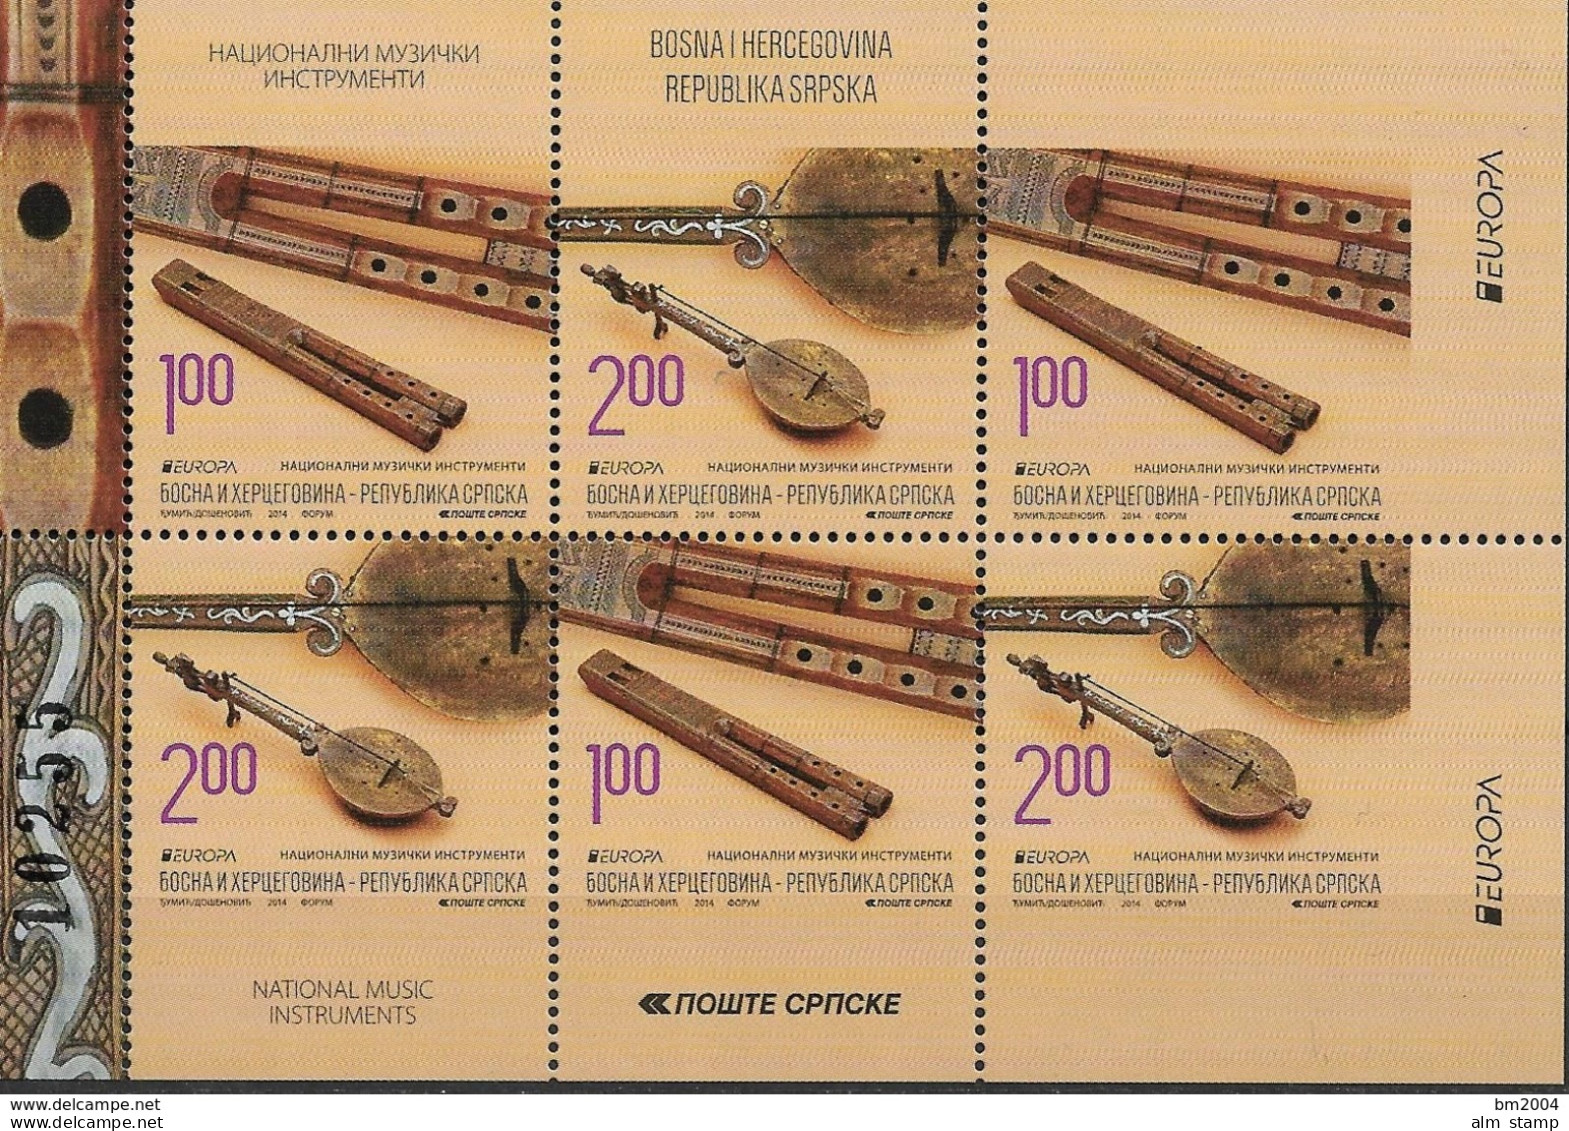 2014 BOSNIA HERZEGOVINA SERB.   REPUBLIKA SRPSKA     Mi. H- Blatt 17  **MNH   Europa National Musical Instruments - 2014